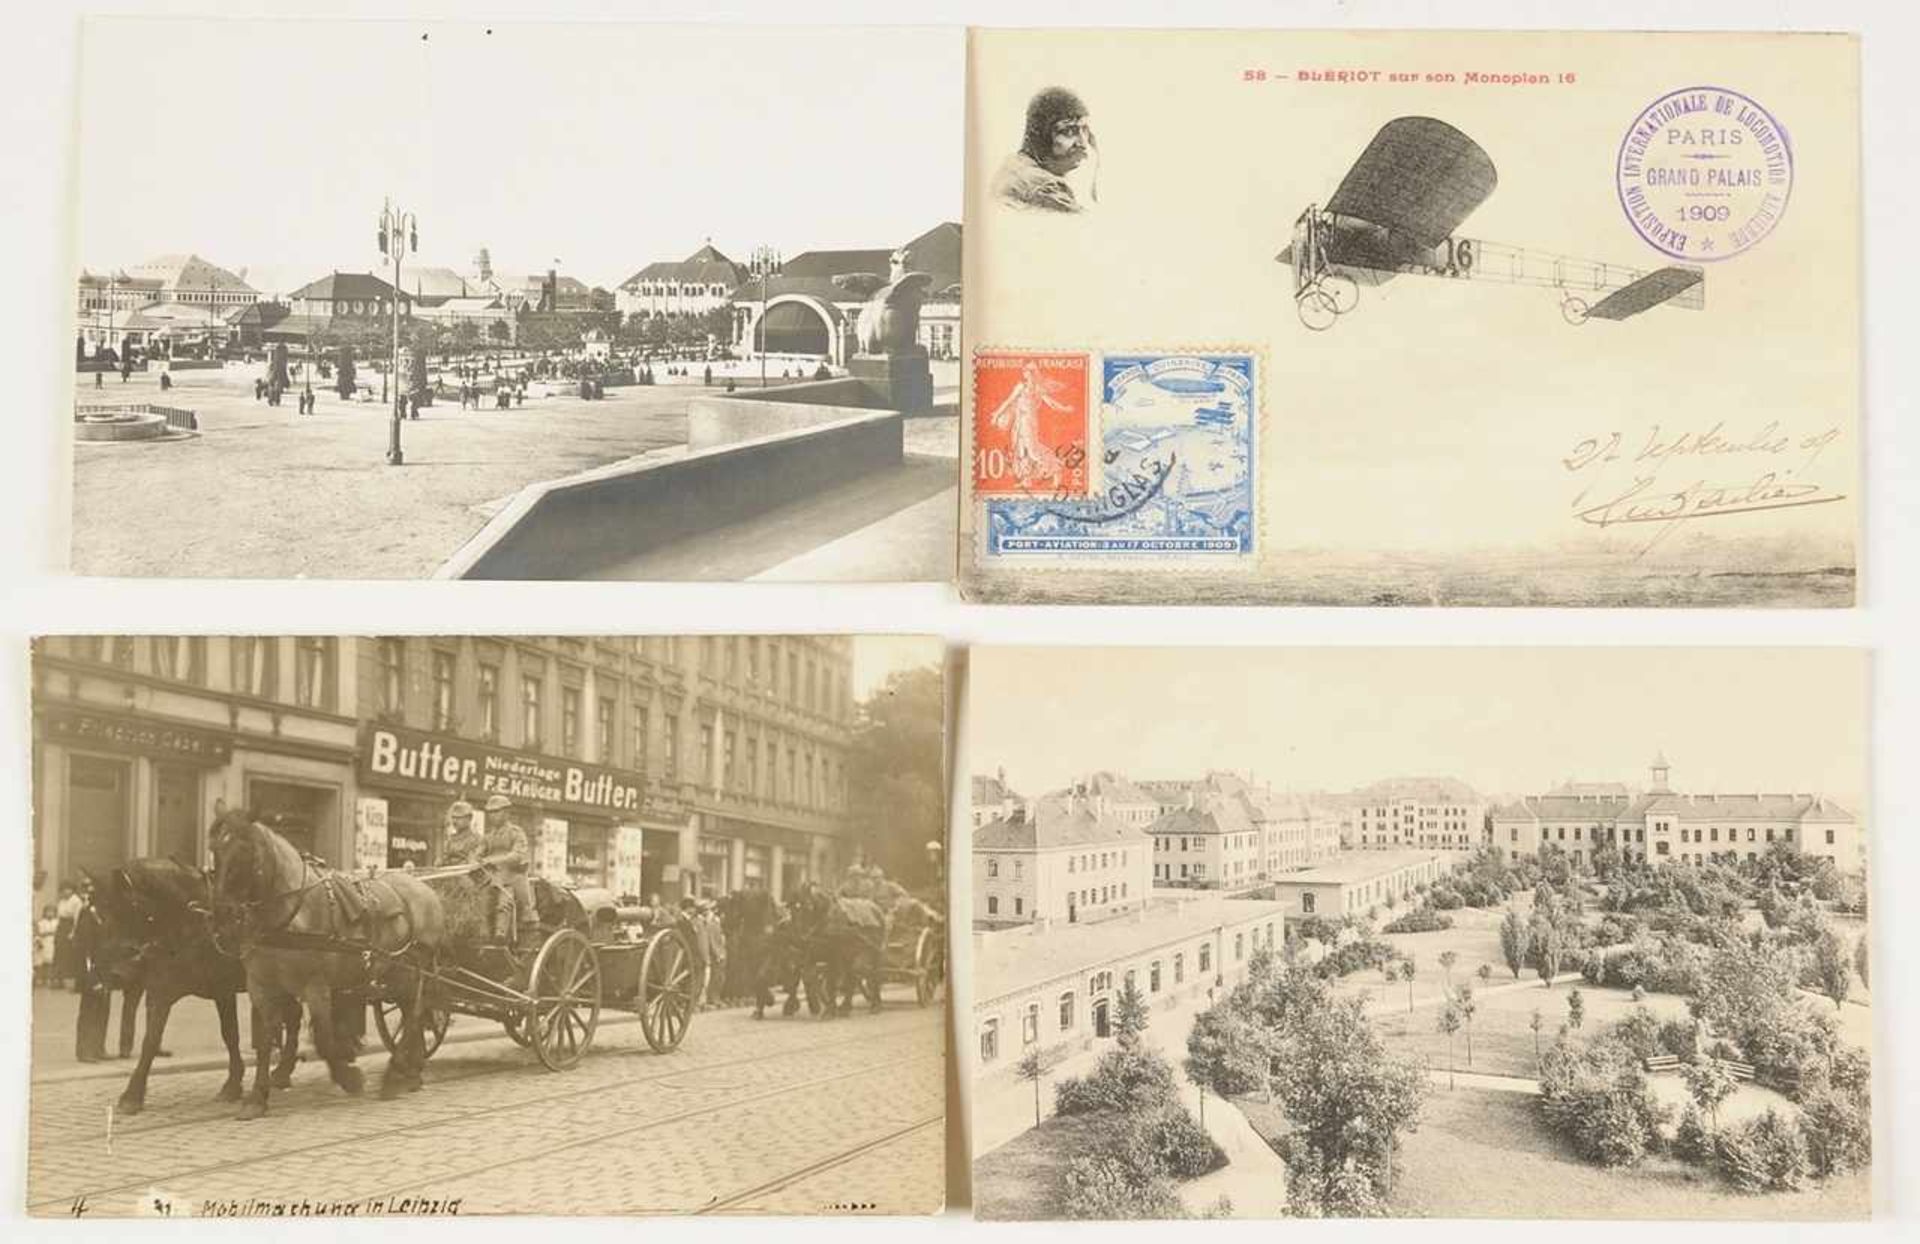 Konvolut Postkarten13-tlg. Versch. Motive, teilw. koloriert, u. a. Mobilmachung in Leipzig,